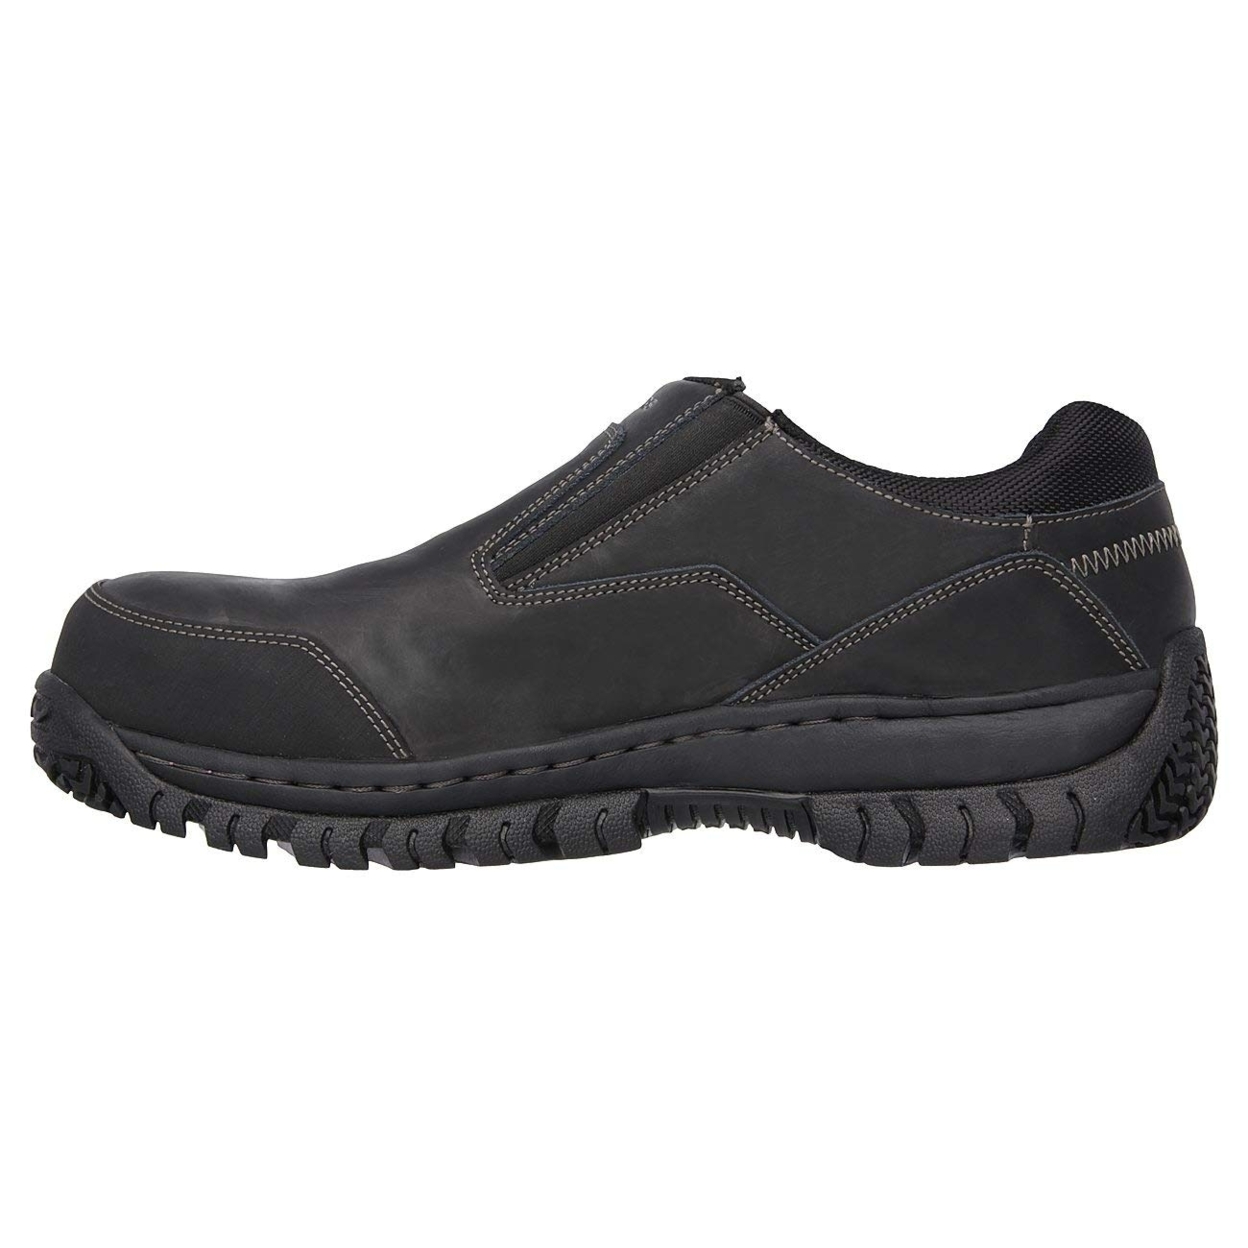 Skechers For Work Men's Hartan Steel Toe Slip-On Shoe Varies BLACK - BLACK, 11.5